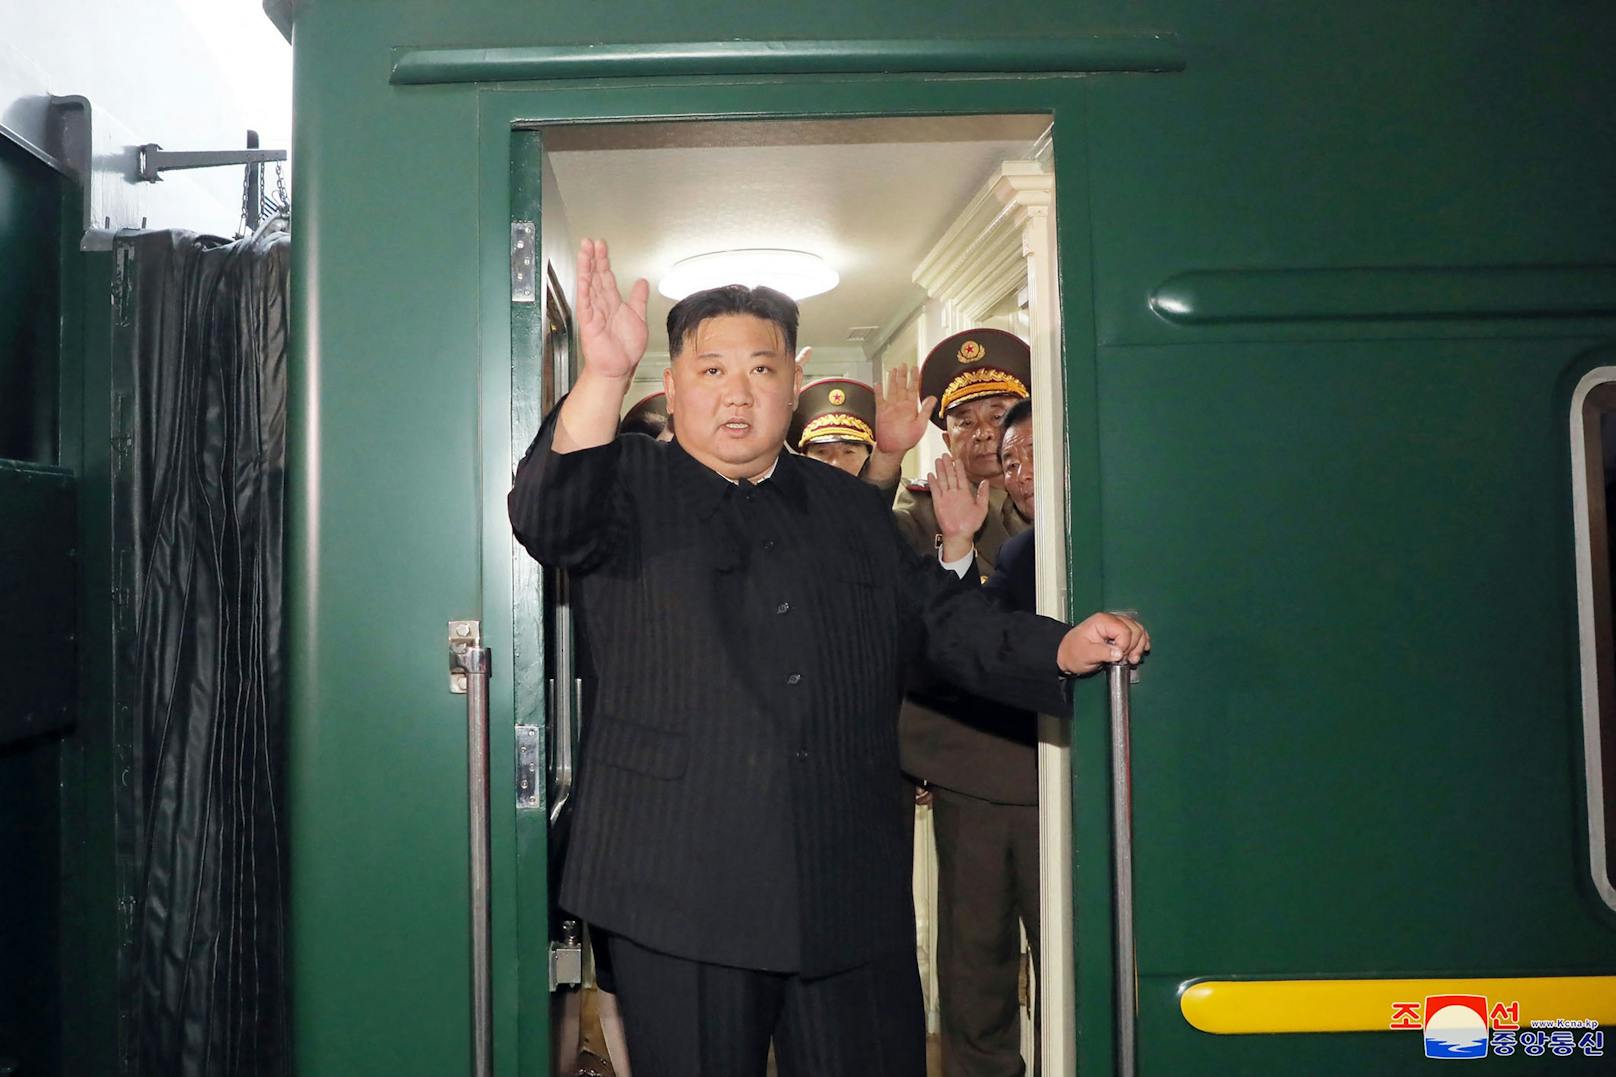 Kim Jong-un in Panzer-Zug auf dem Weg zu Putin